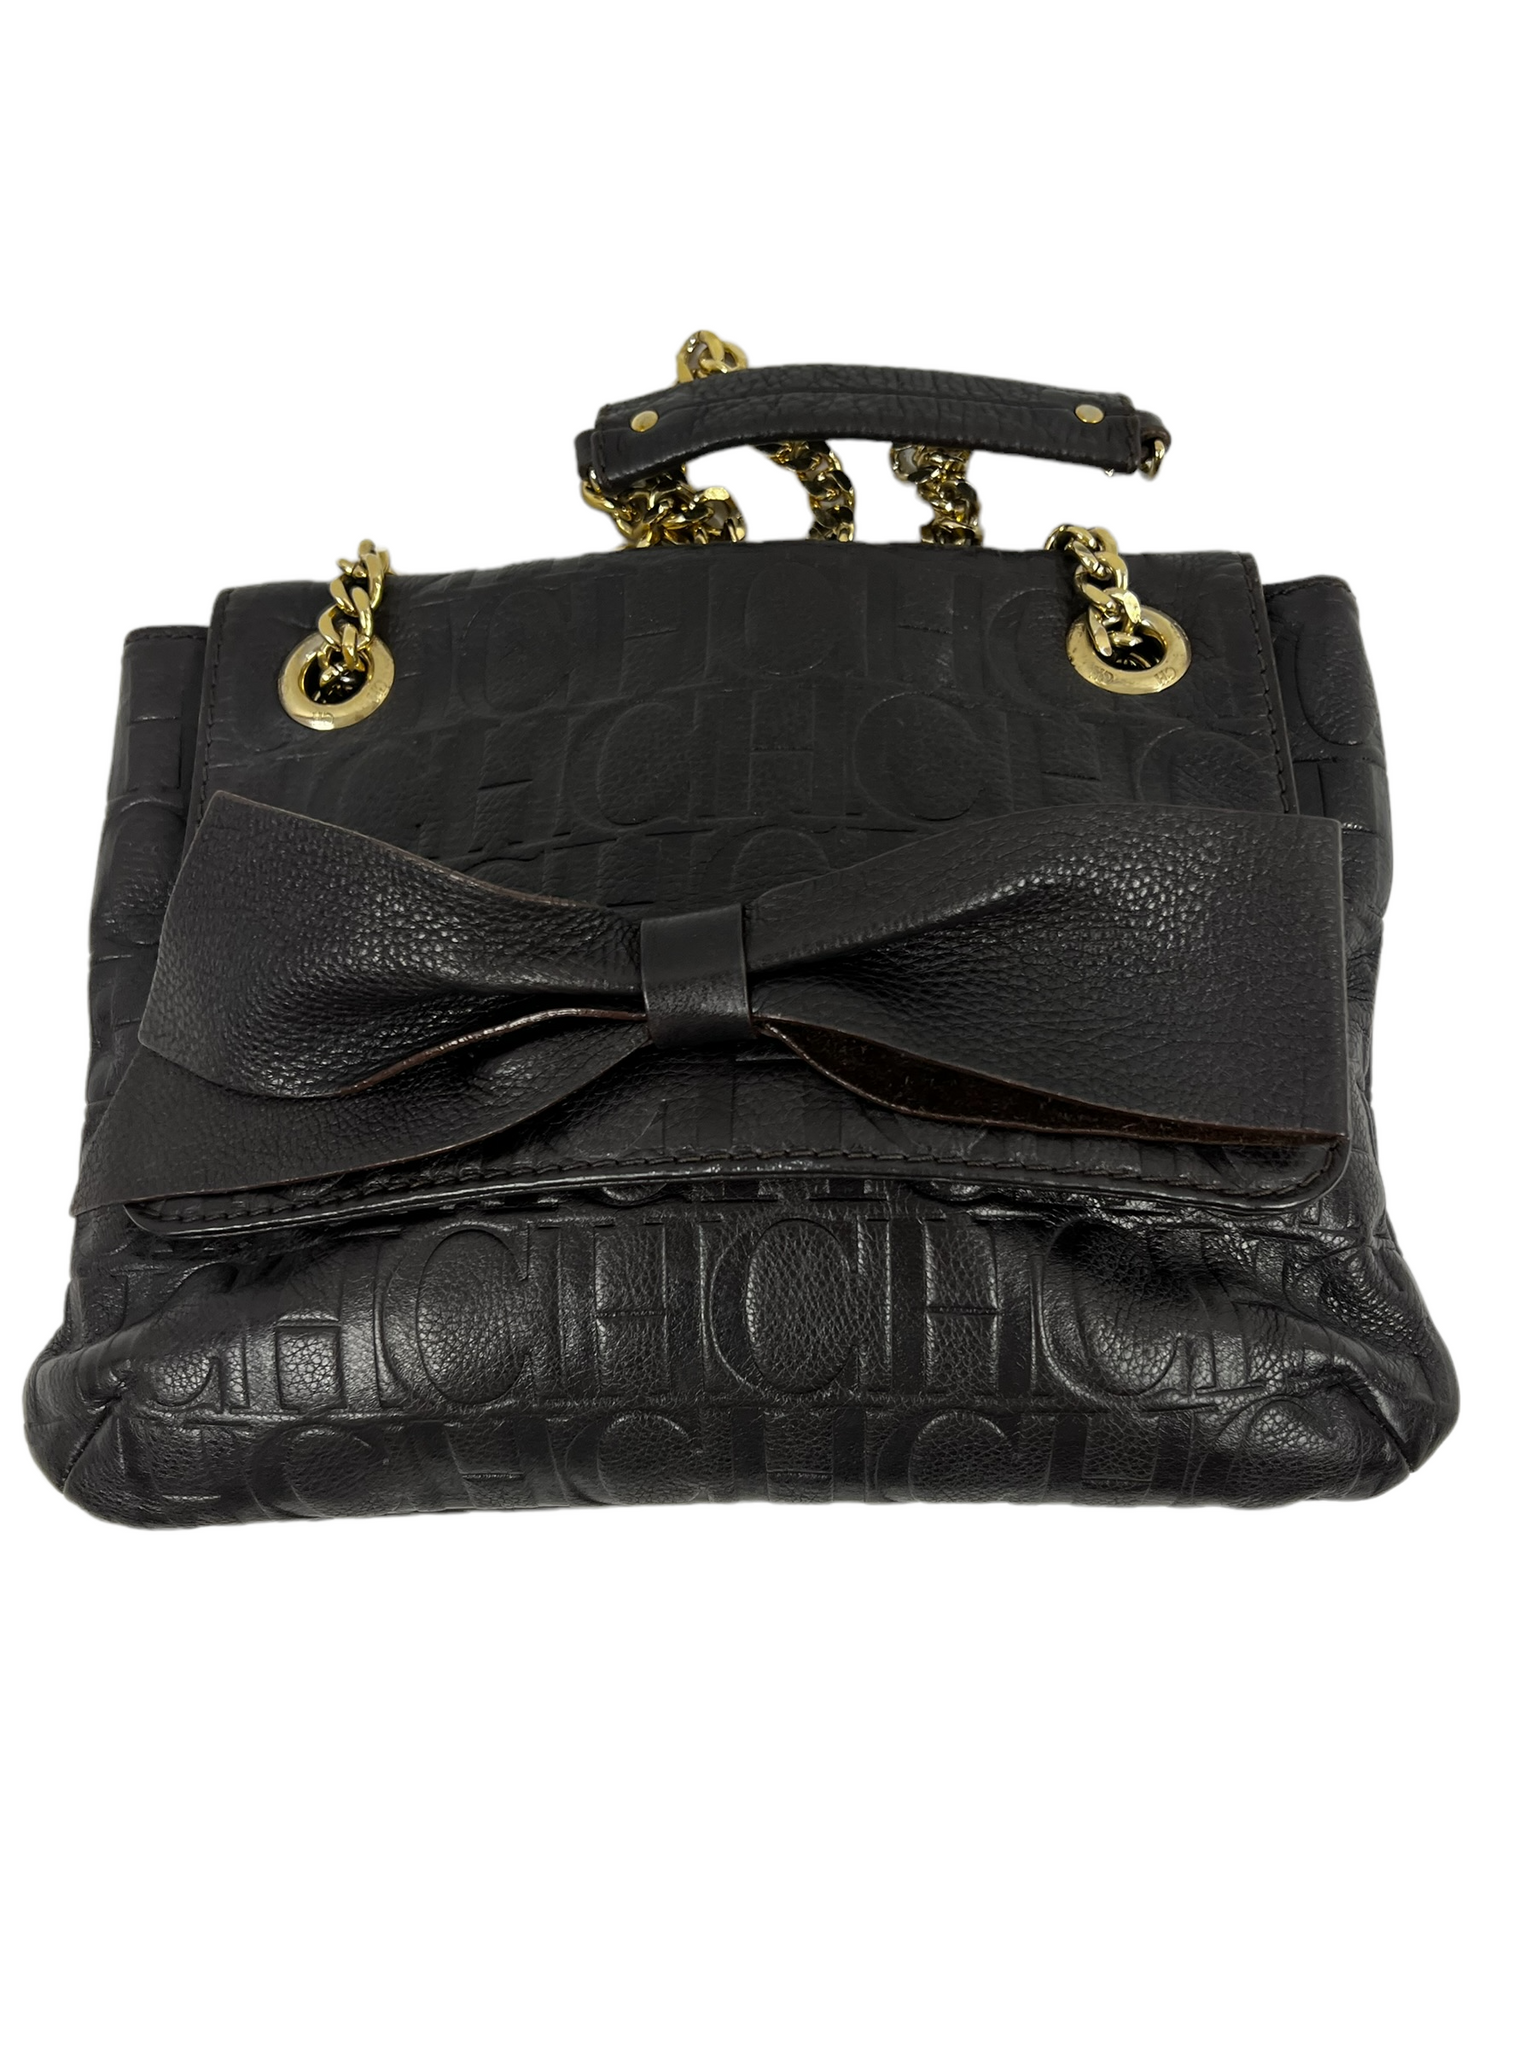 Carolina Herrera Embossed Leather Crossbody Bag